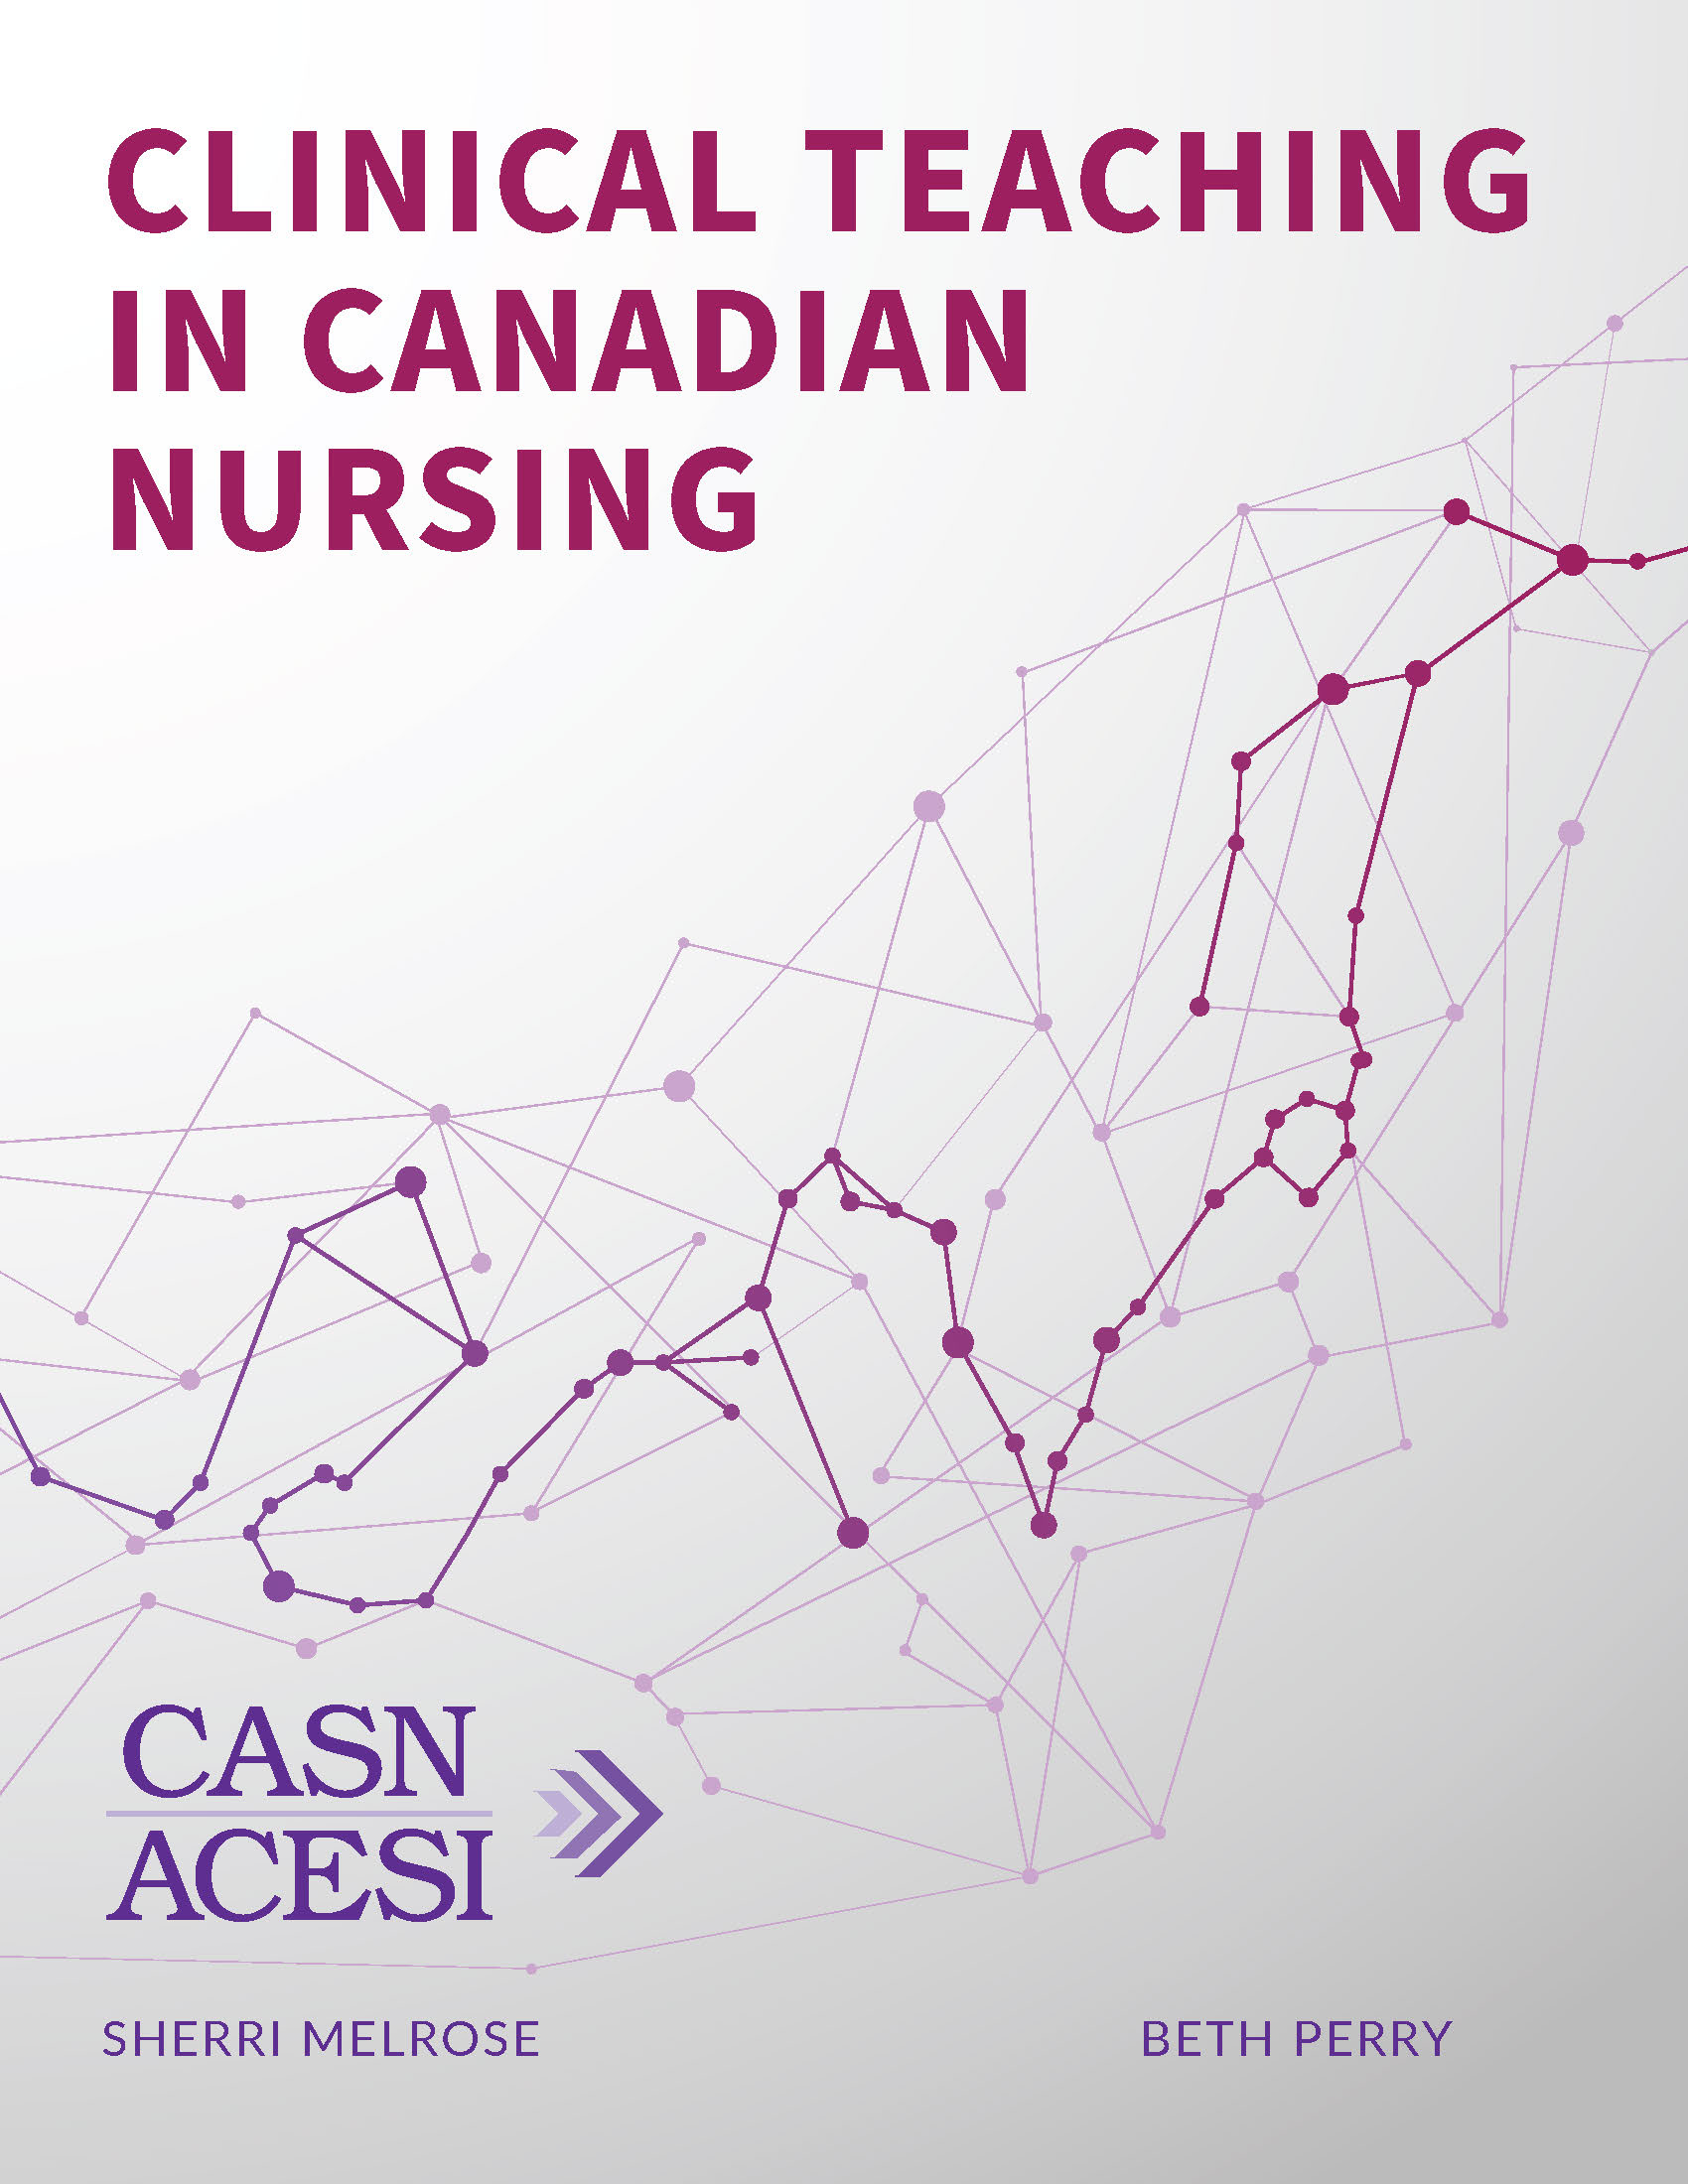 Clinical teaching in Canadian nursing